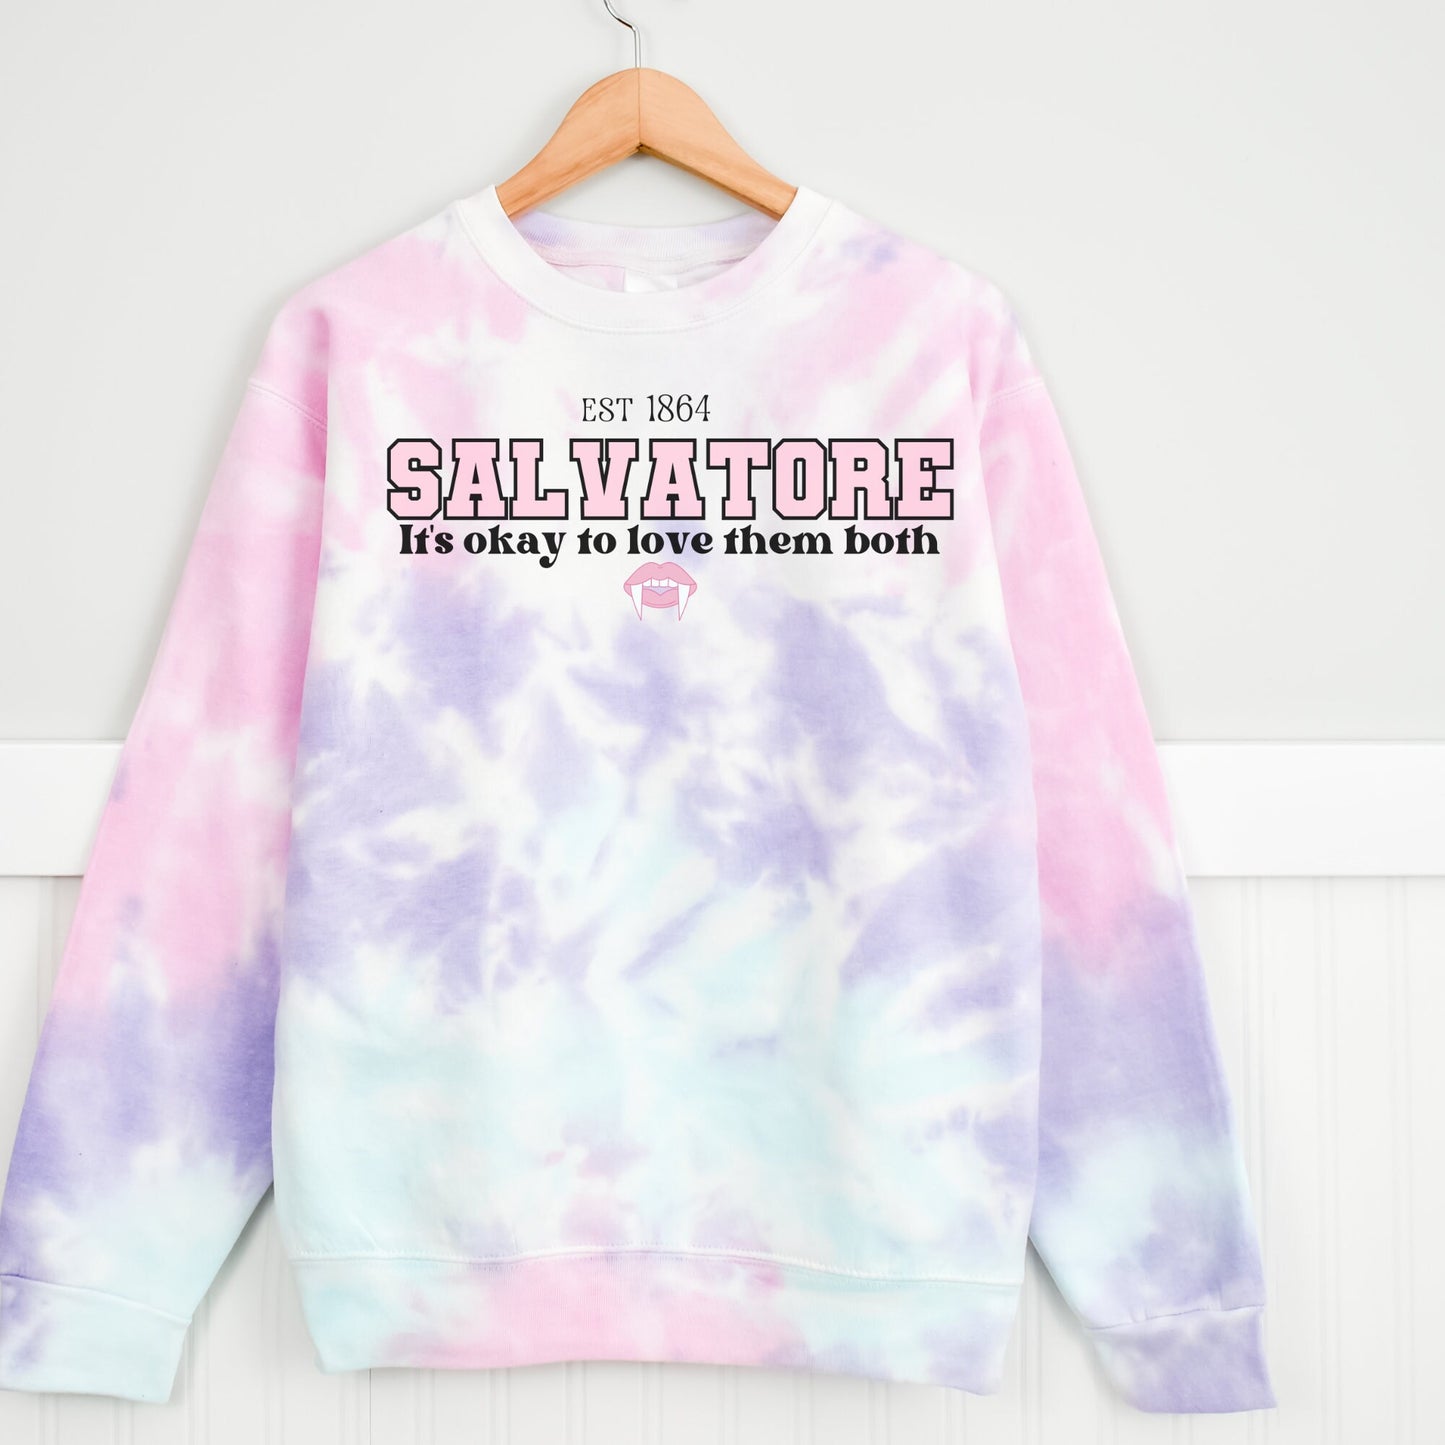 Salvatore Brothers Sweater, TVD sweatshirt, Tvd merch, Salvatore brothers merch, Tvd fan gift, Mystic Falls merch, Damon Salvatore